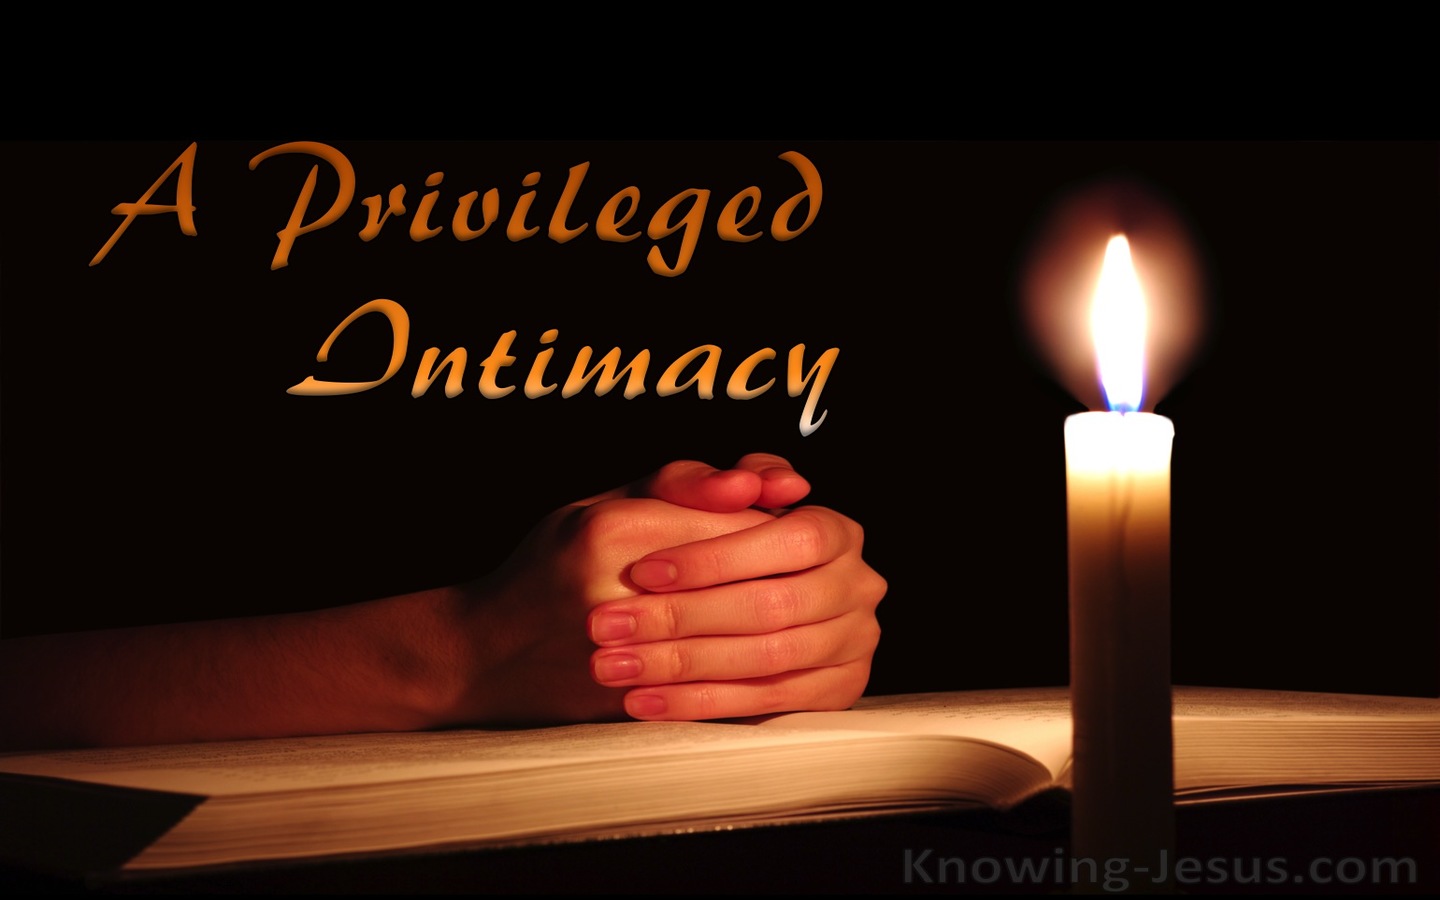 A Privileged Intimacy (devotional)02-01 (orange)